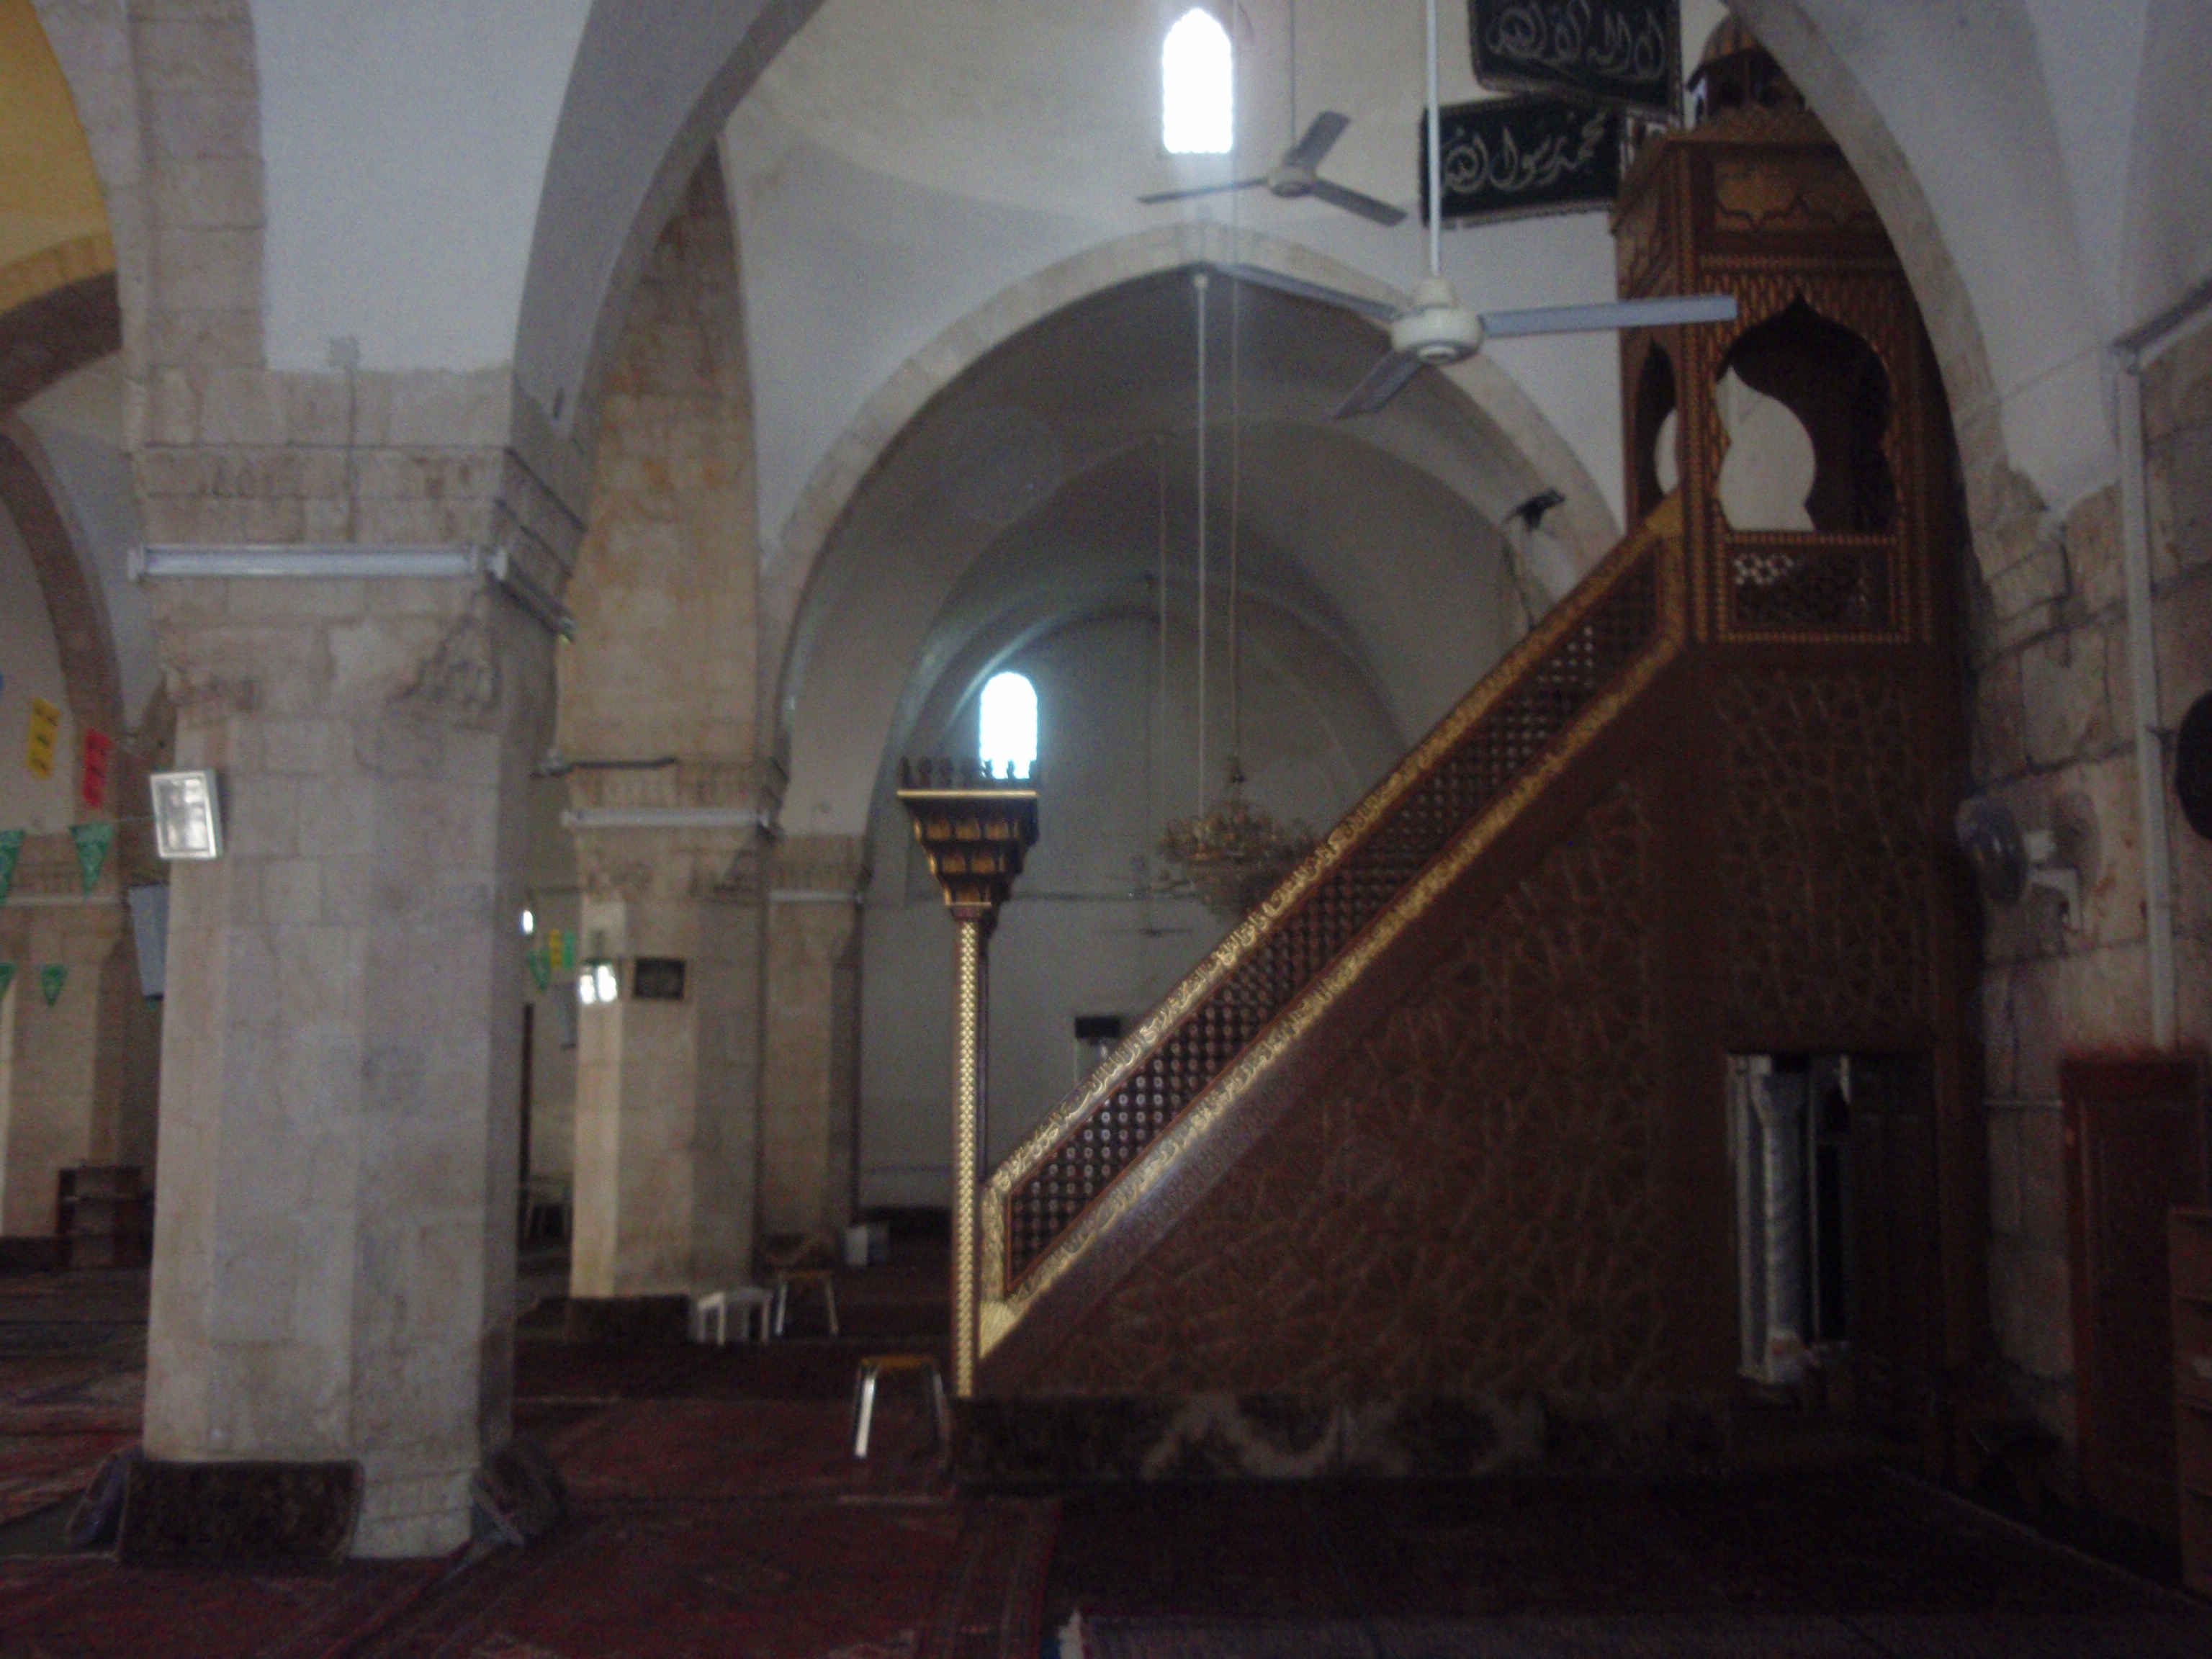 No light usage in the main prayer-hall, outside prayer-times (March 13:40). By: Salam Jijakli, 2010.